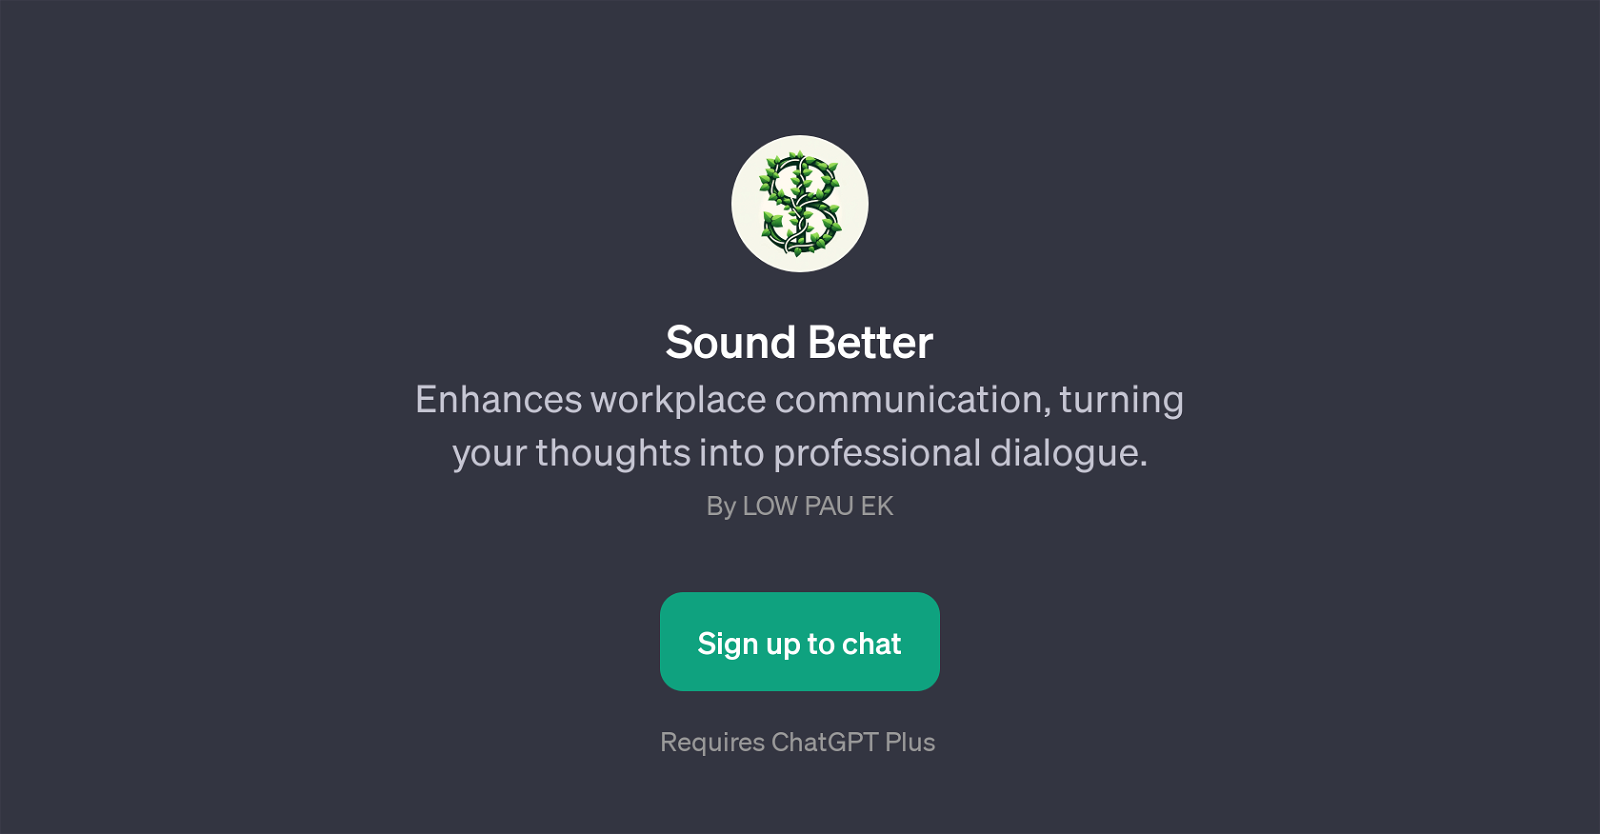 Sound Better website